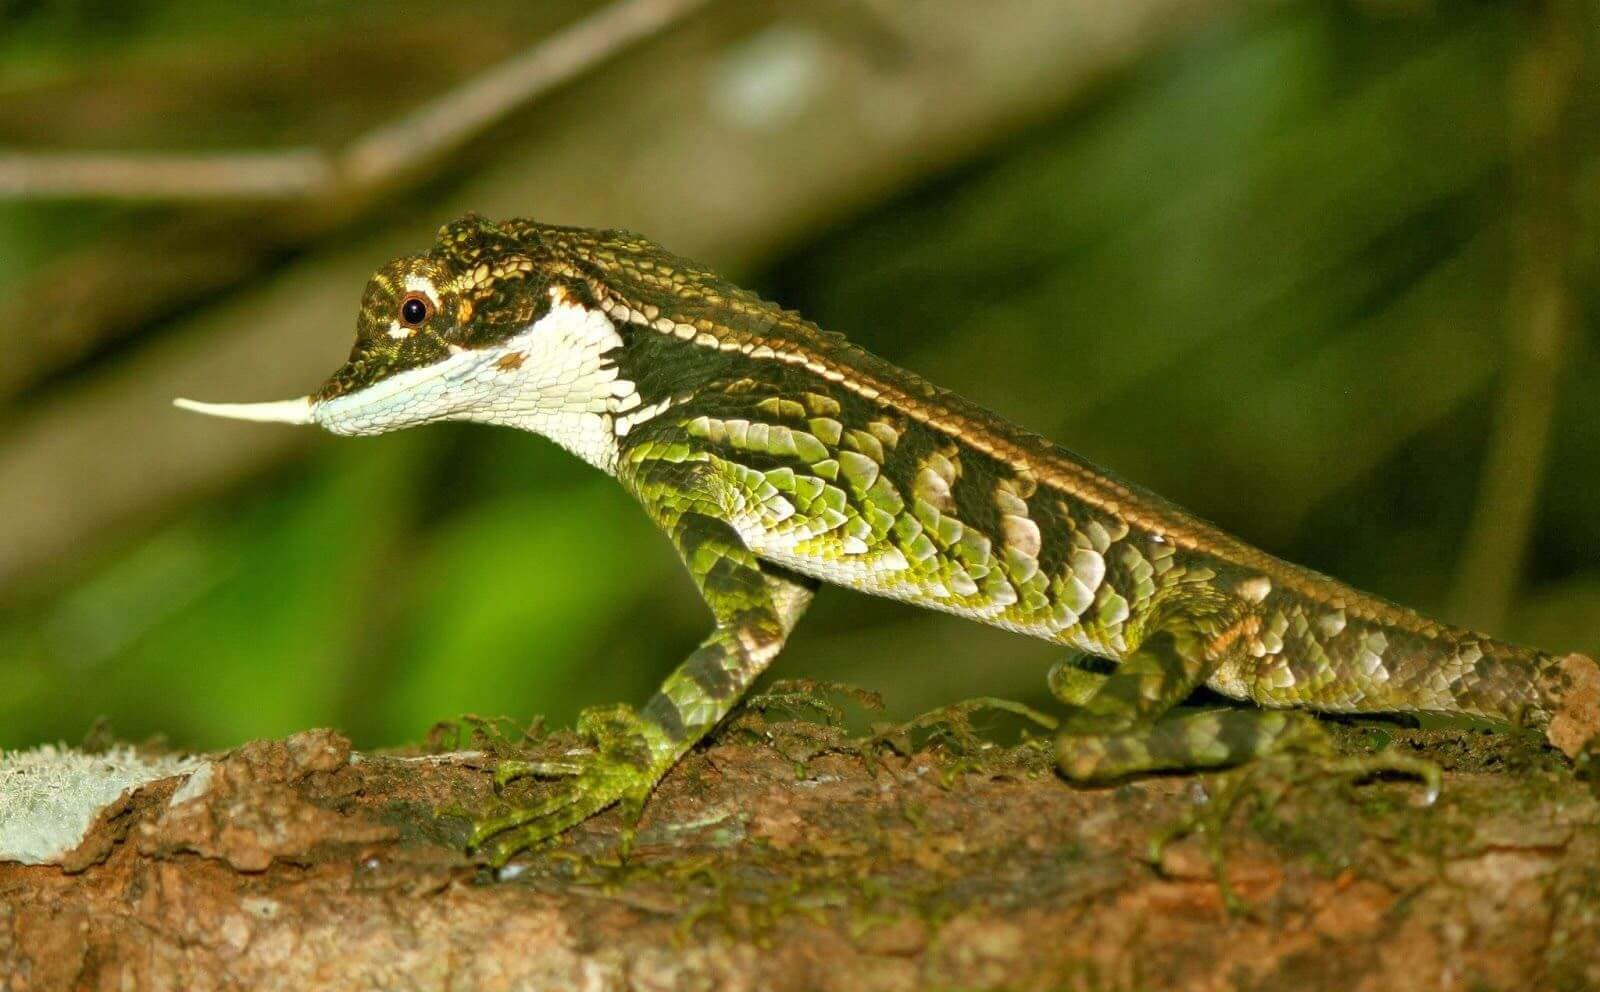 Ceratophora stoddartii is an endemic lizard found in Horton Plains of Sri Lanka